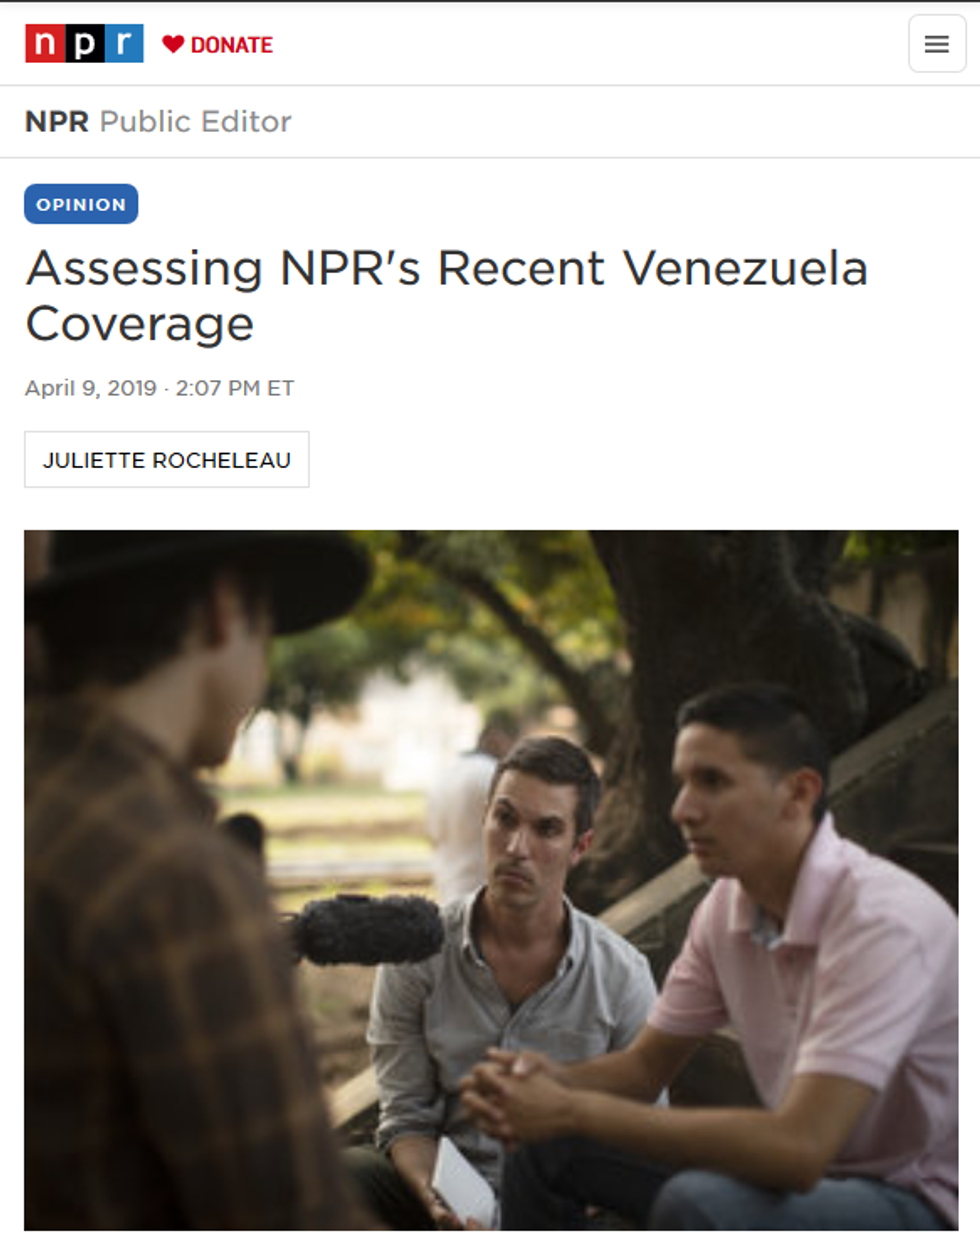 NPR: Assessing NPR's Recent Venezuela Coverage